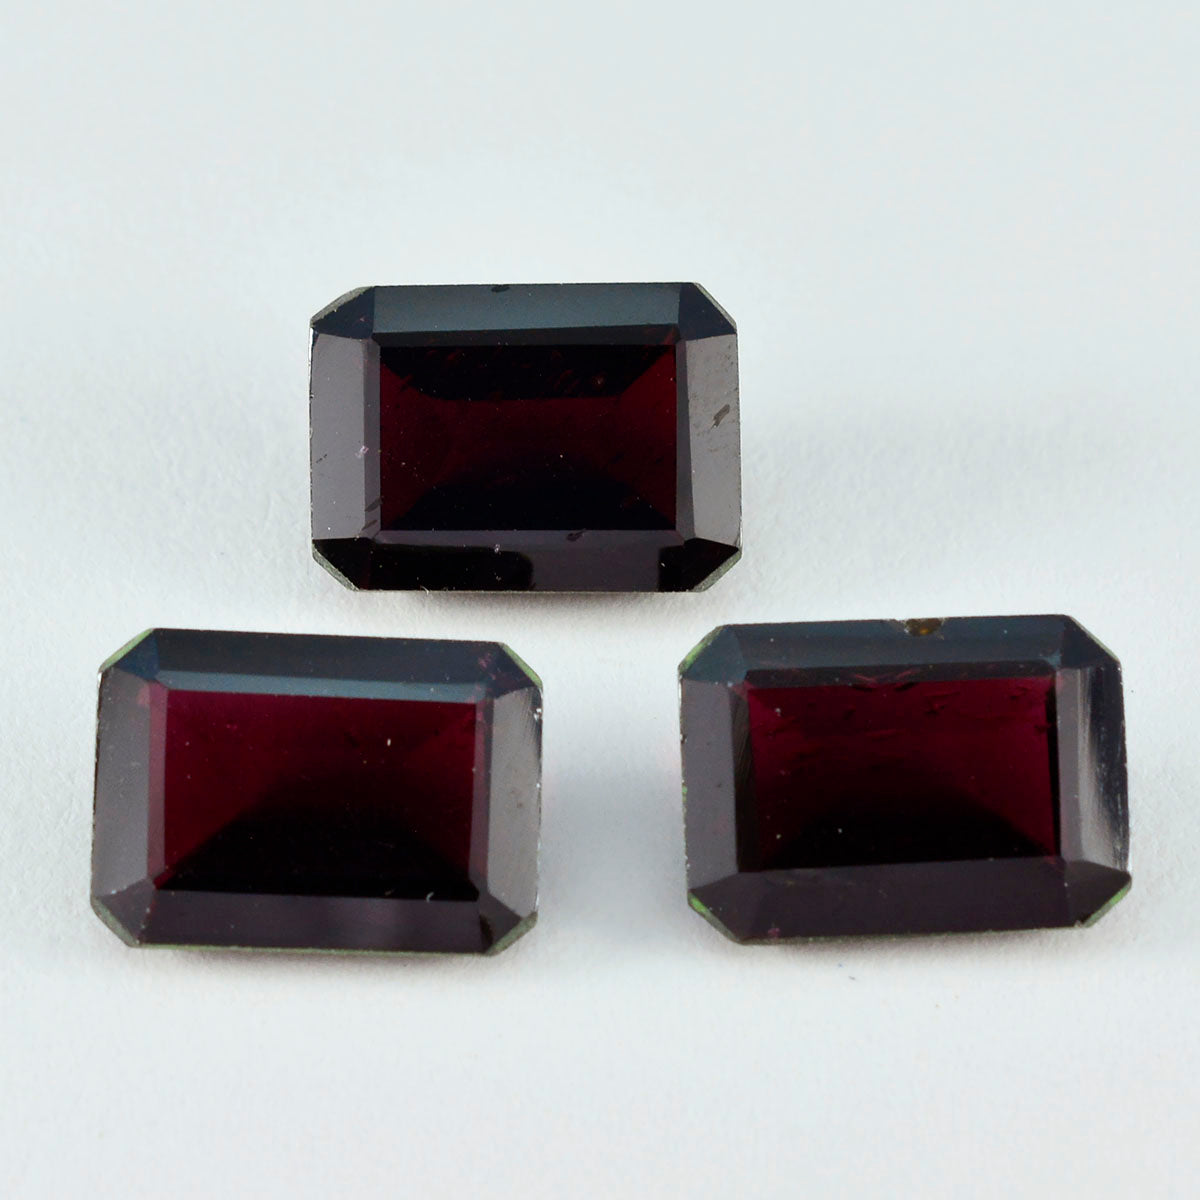 Riyogems 1PC Echte Rode Granaat Facet 12x16 mm Achthoekige vorm, mooie kwaliteit edelsteen